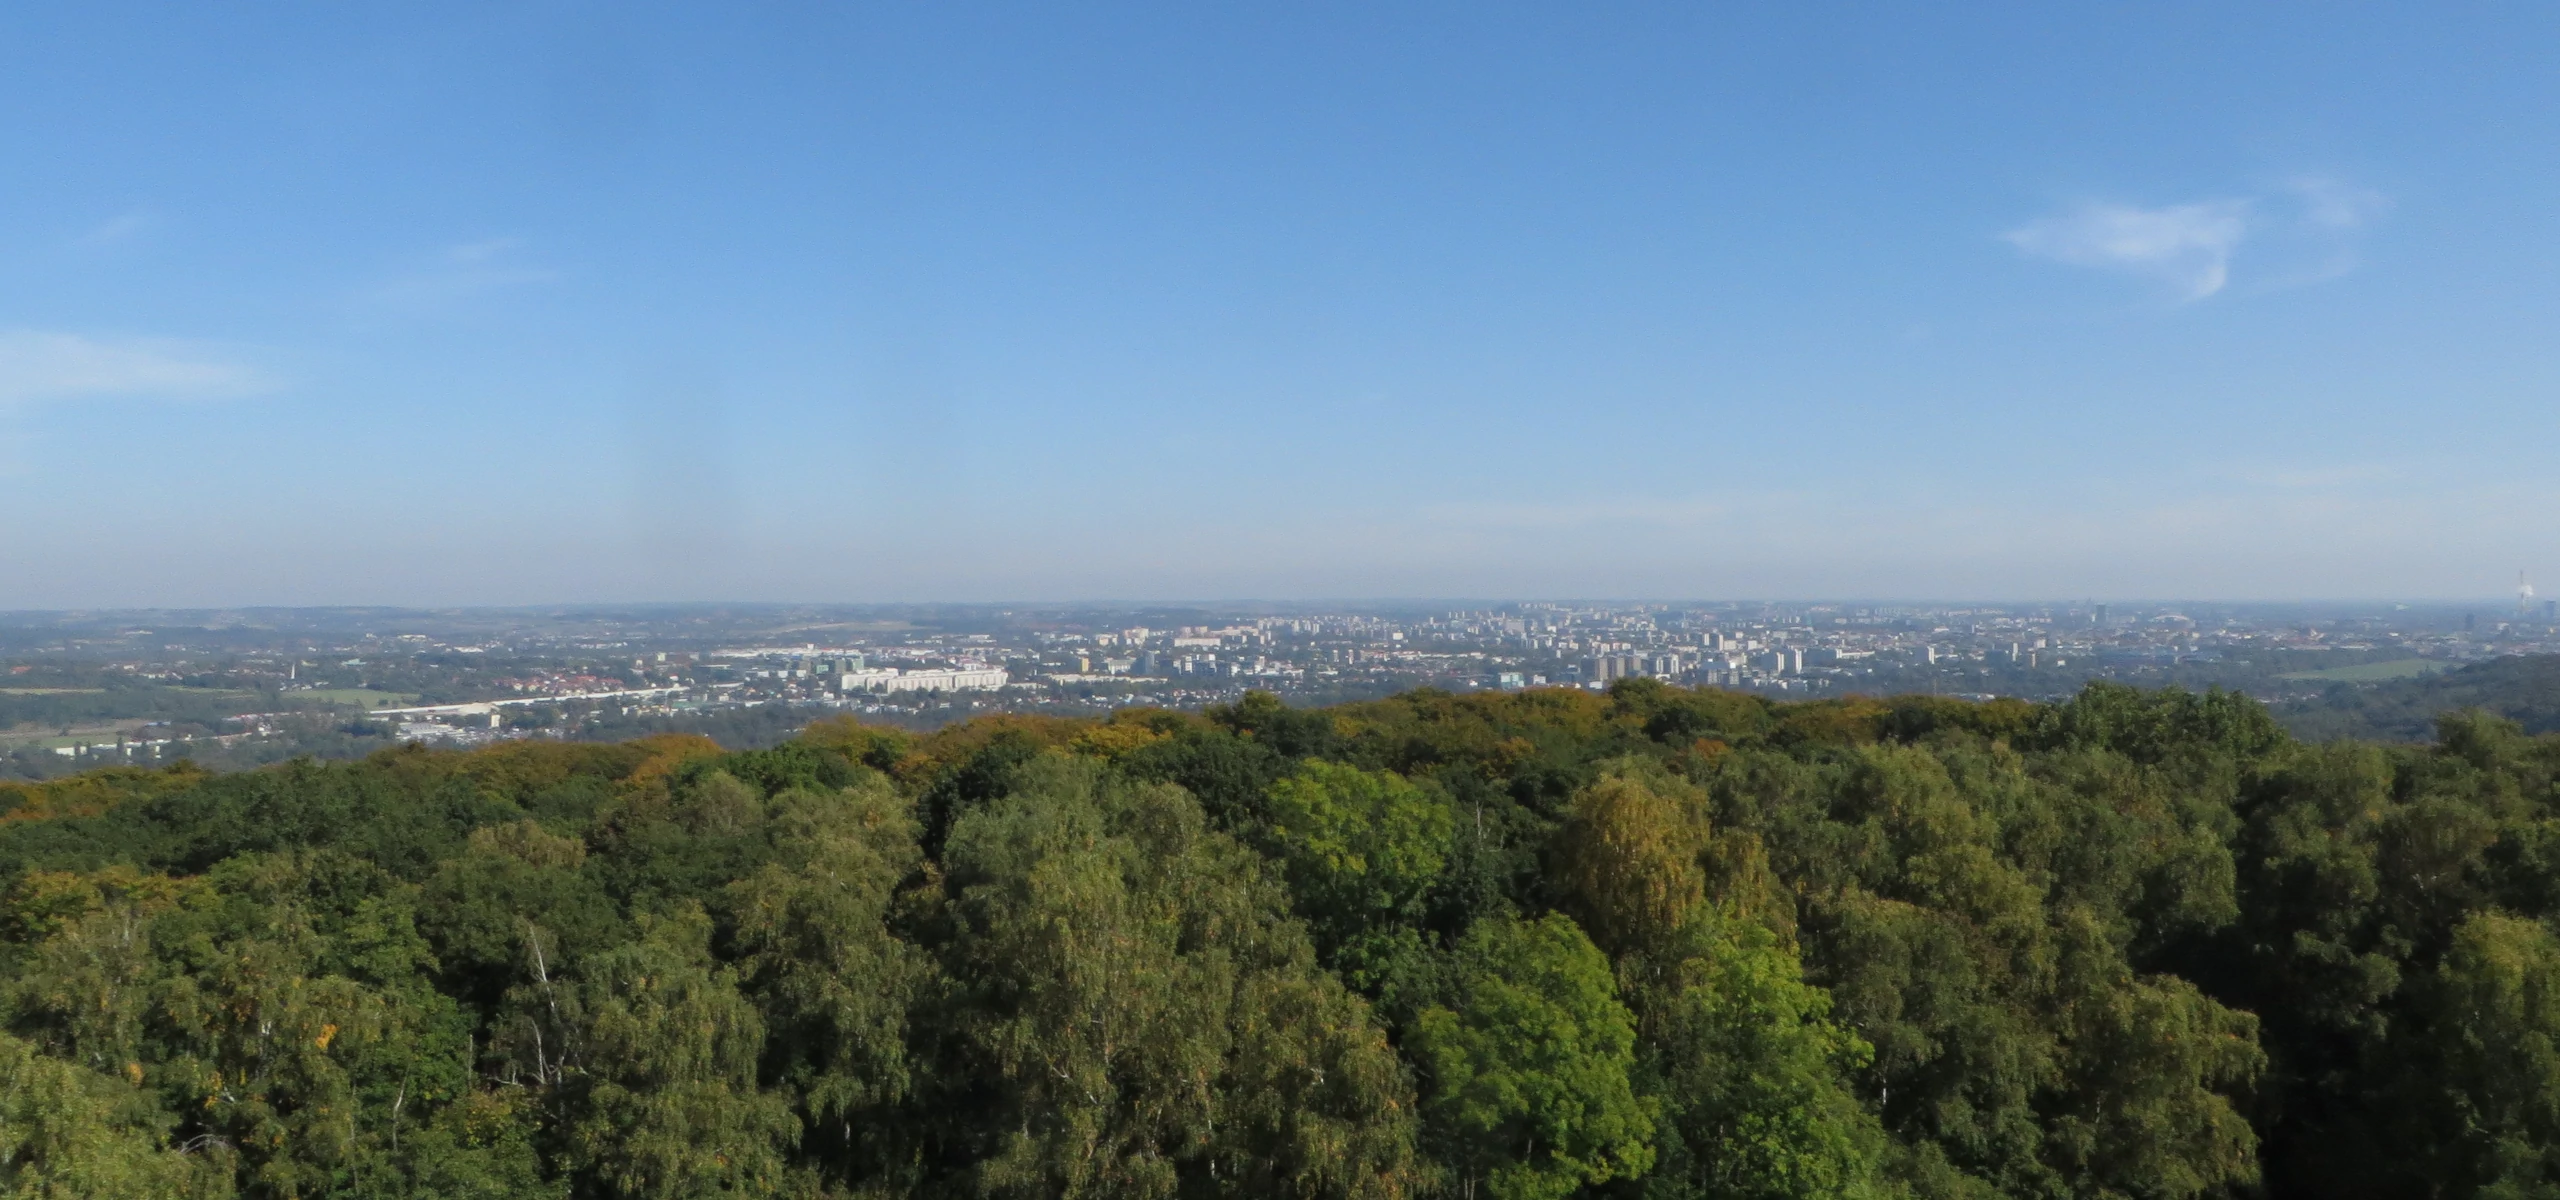 Kraków panorama from Józef Piłsudski's Mound